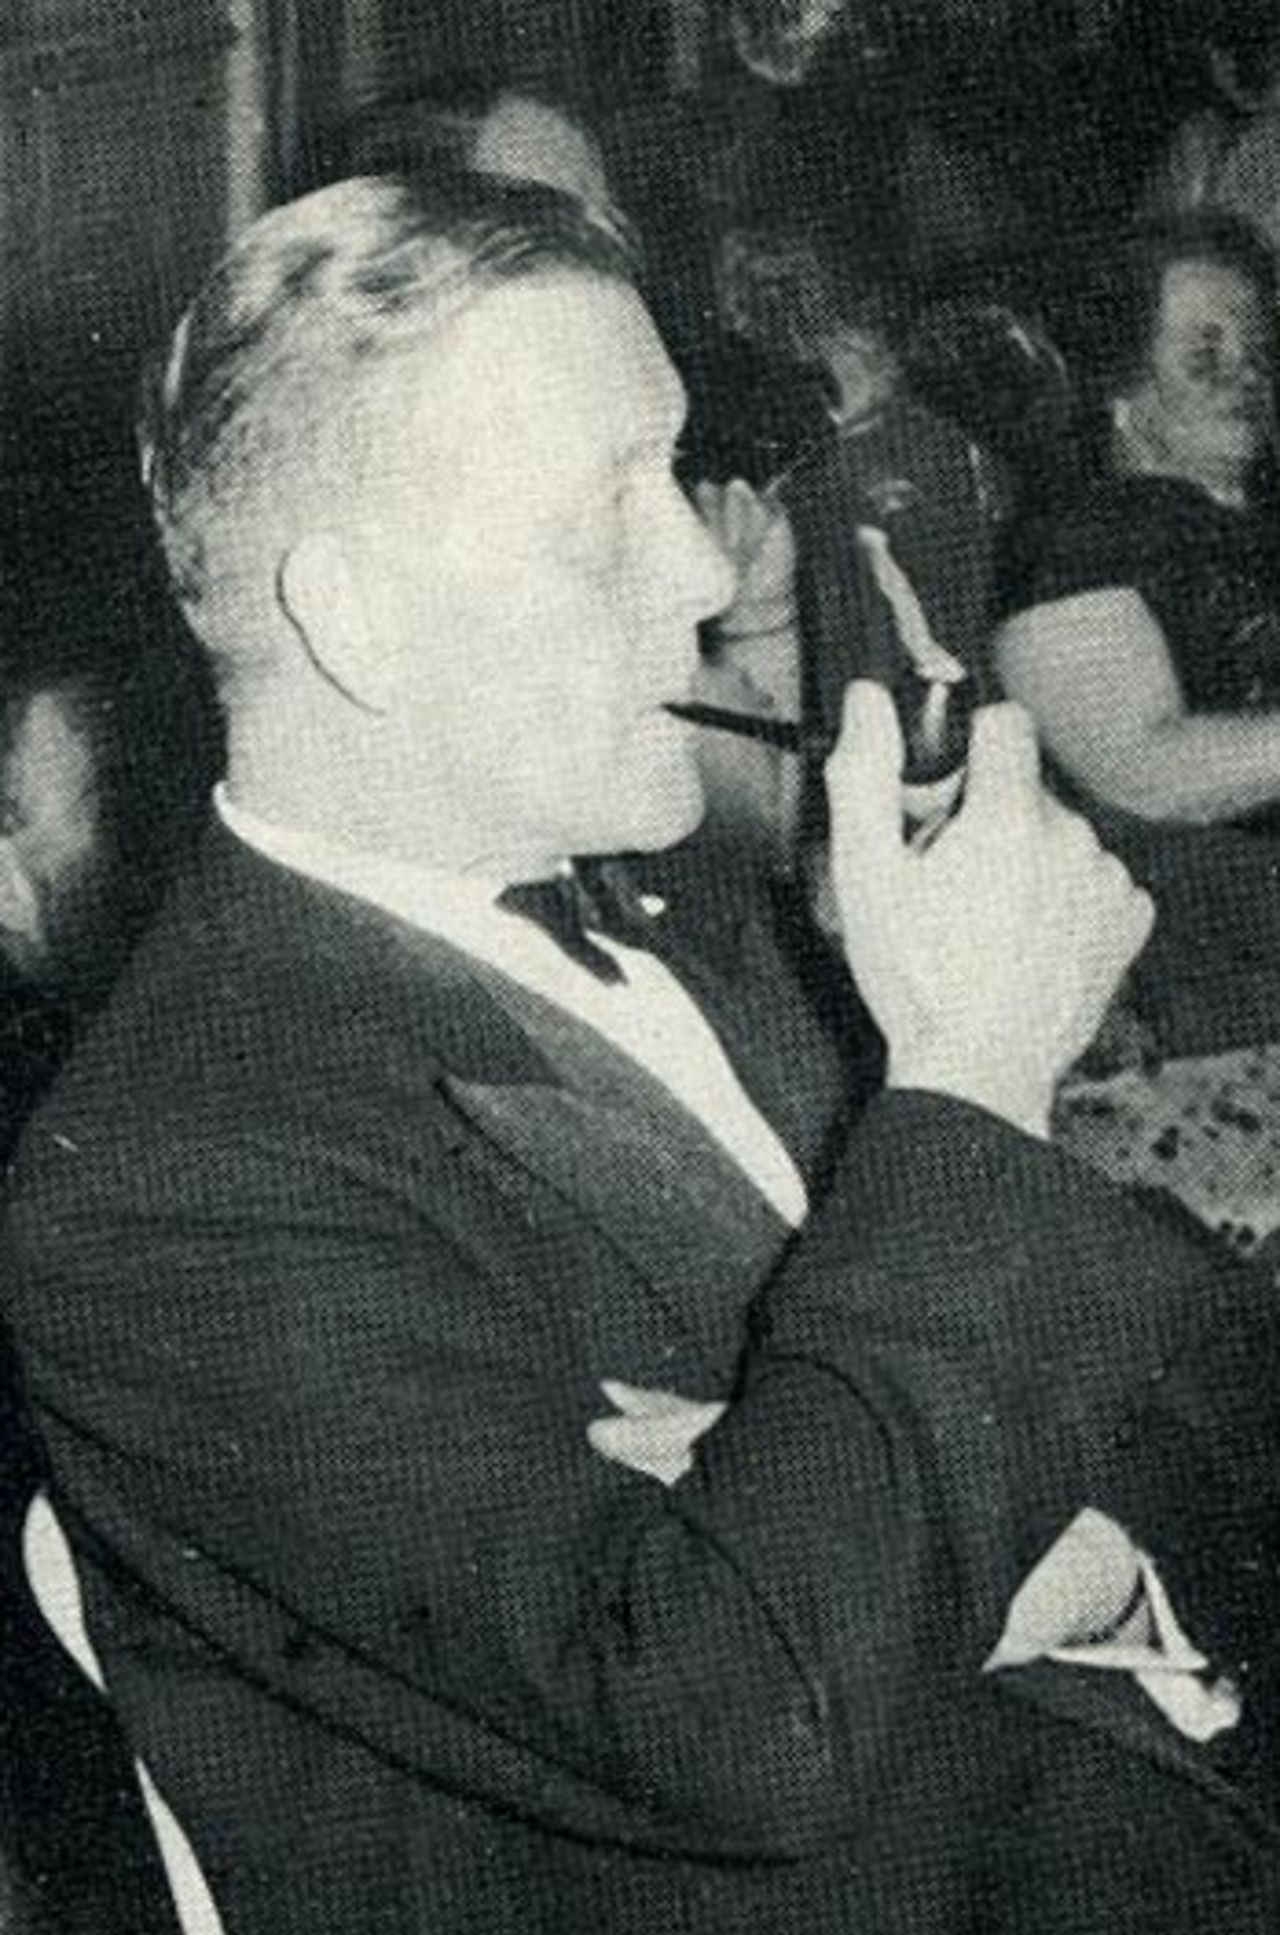 Jim Smith in retirement, 1976